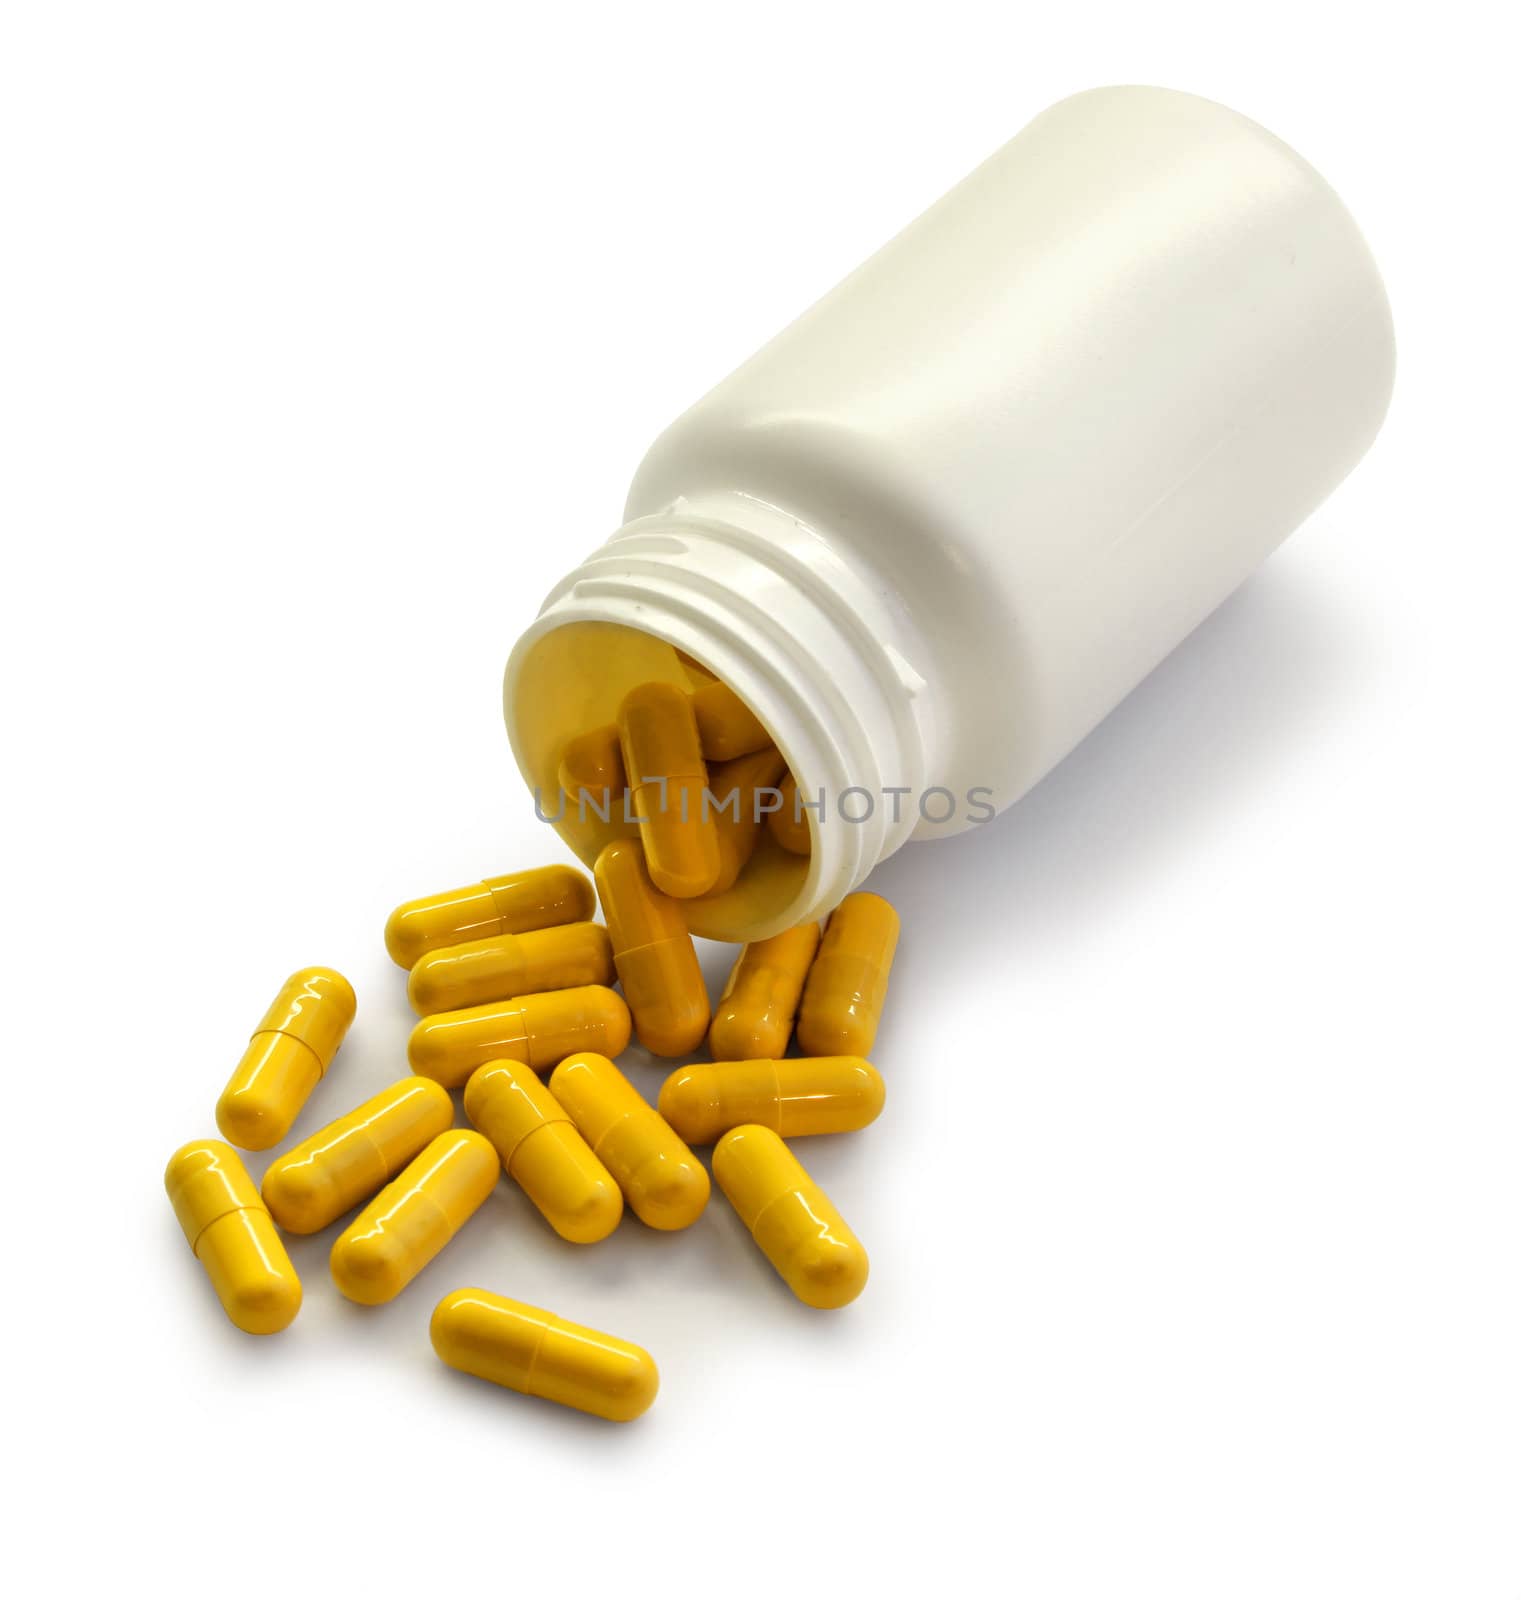 Blank medicine pot open with yellow drug capsular